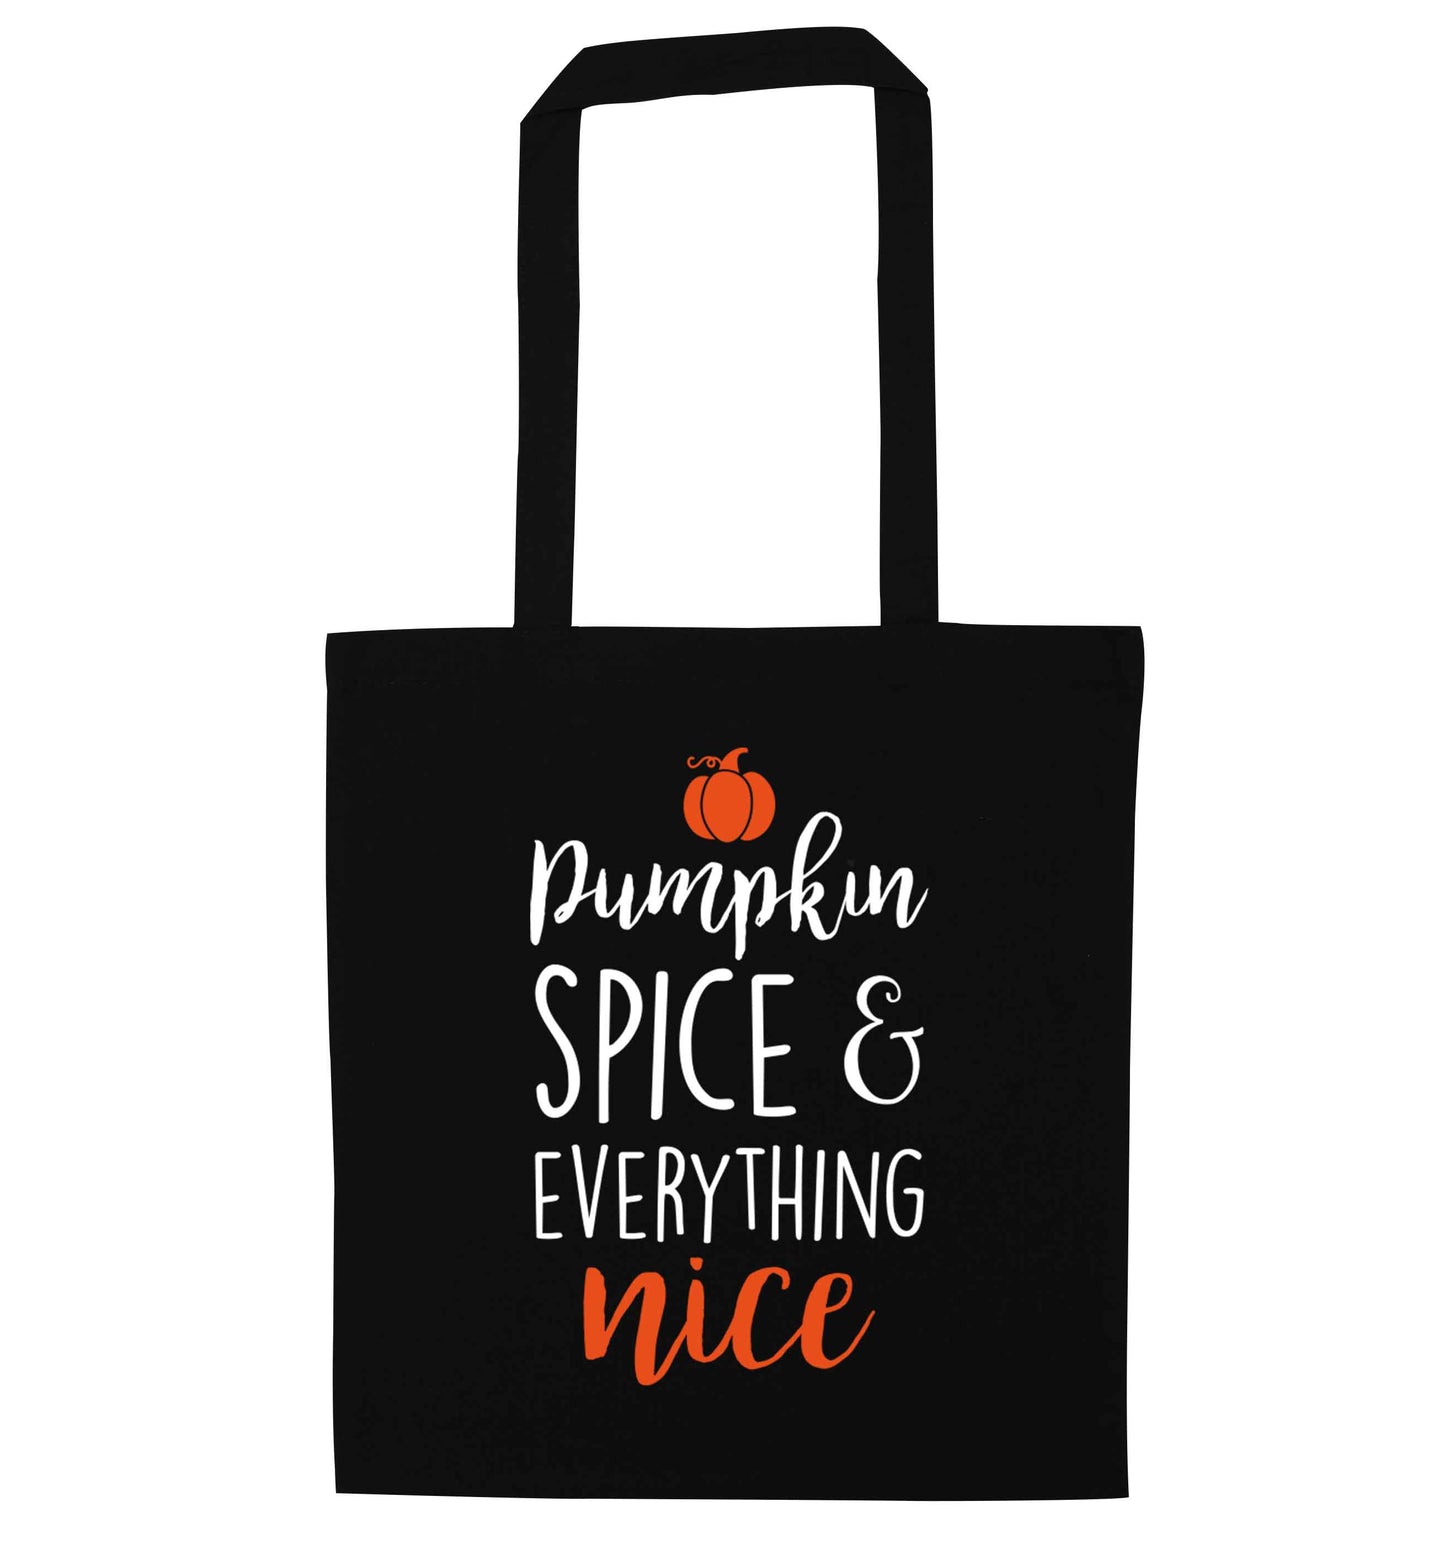 Pumpkin Spice Nice black tote bag